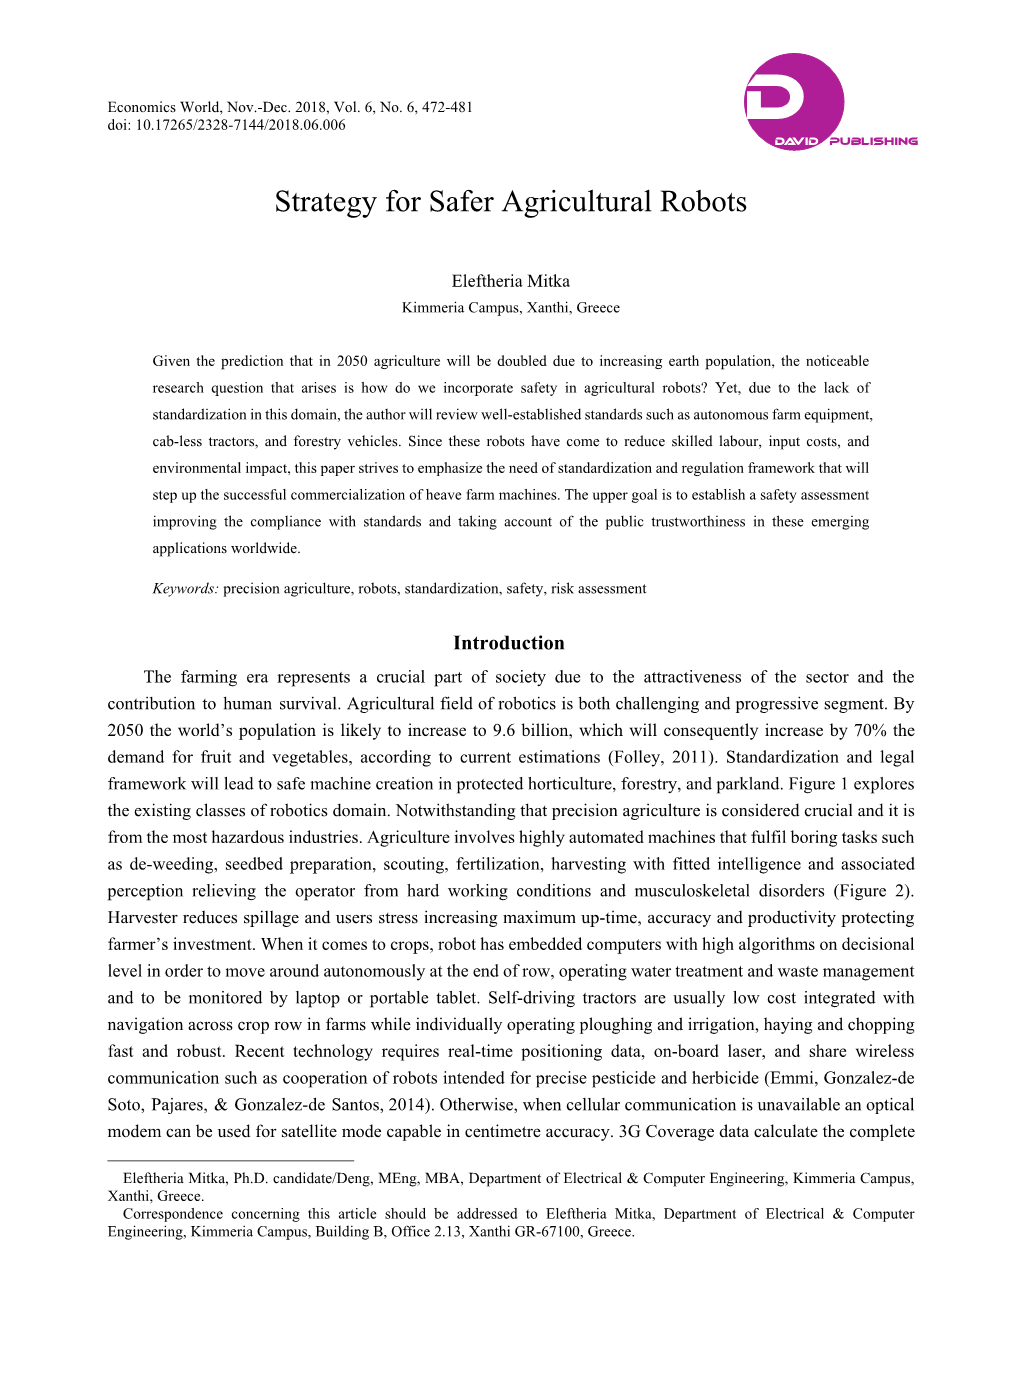 Strategy for Safer Agricultural Robots